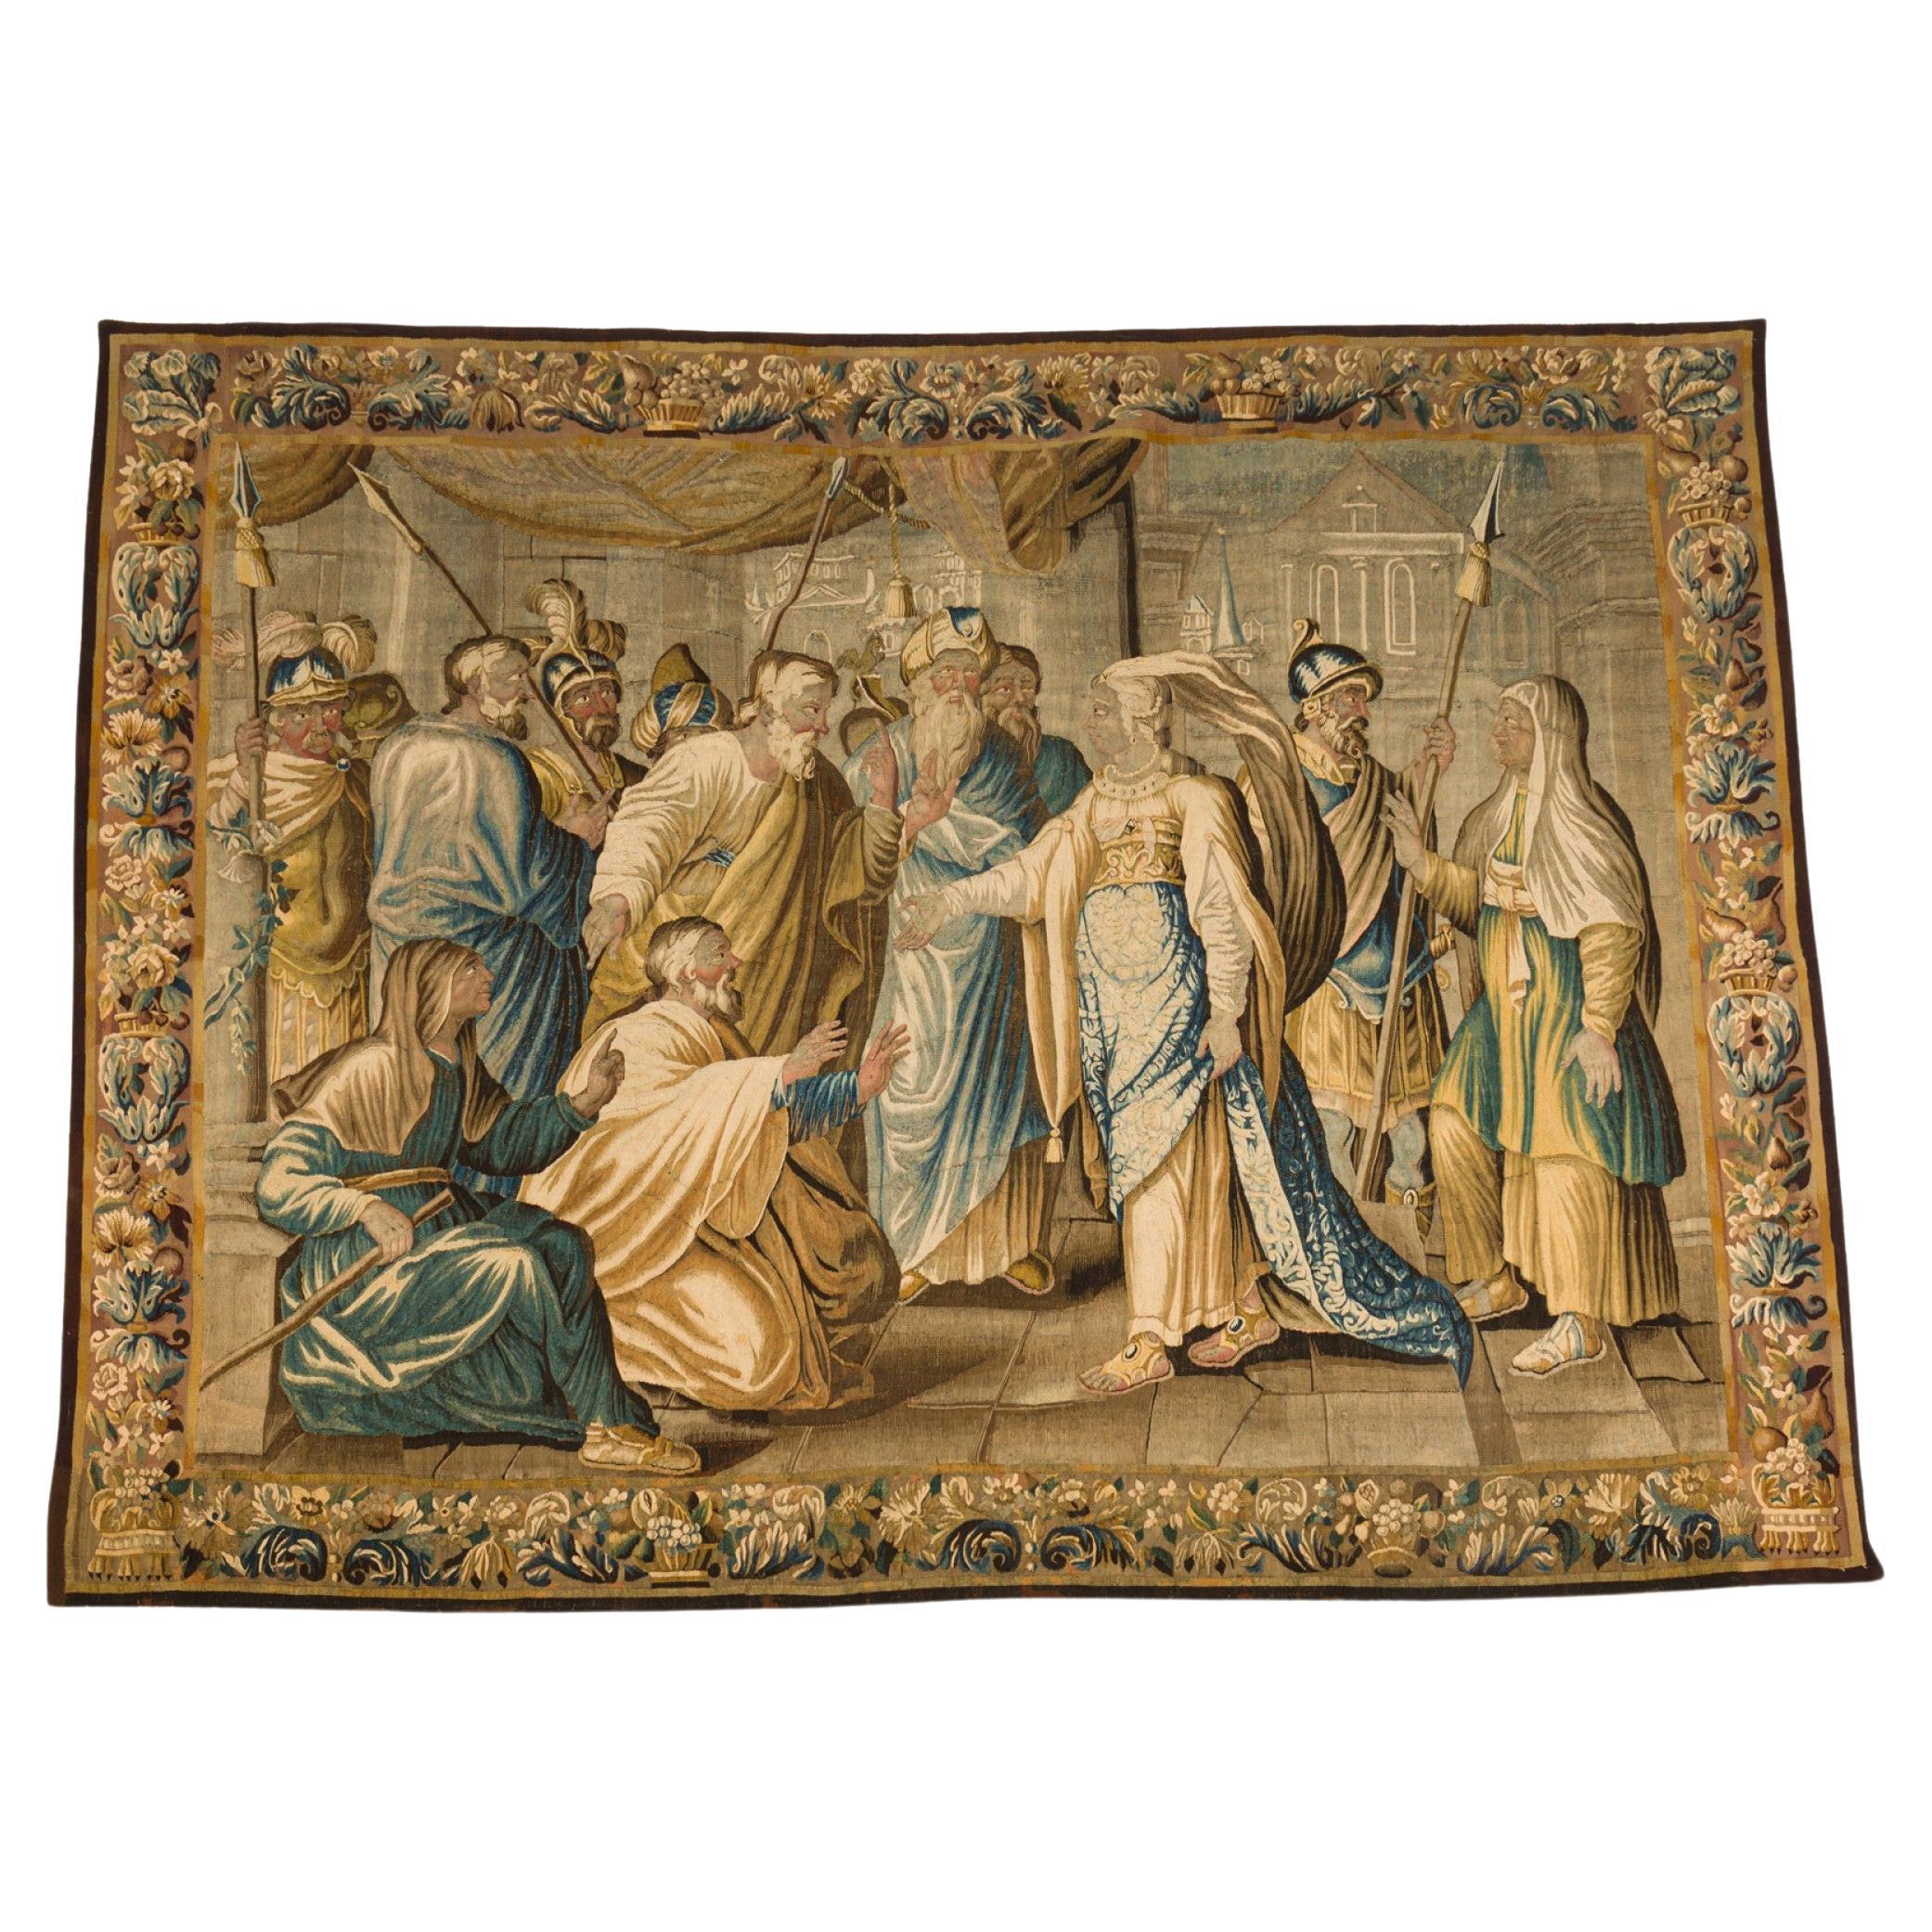 18th Century Belgian Historical Tapestry